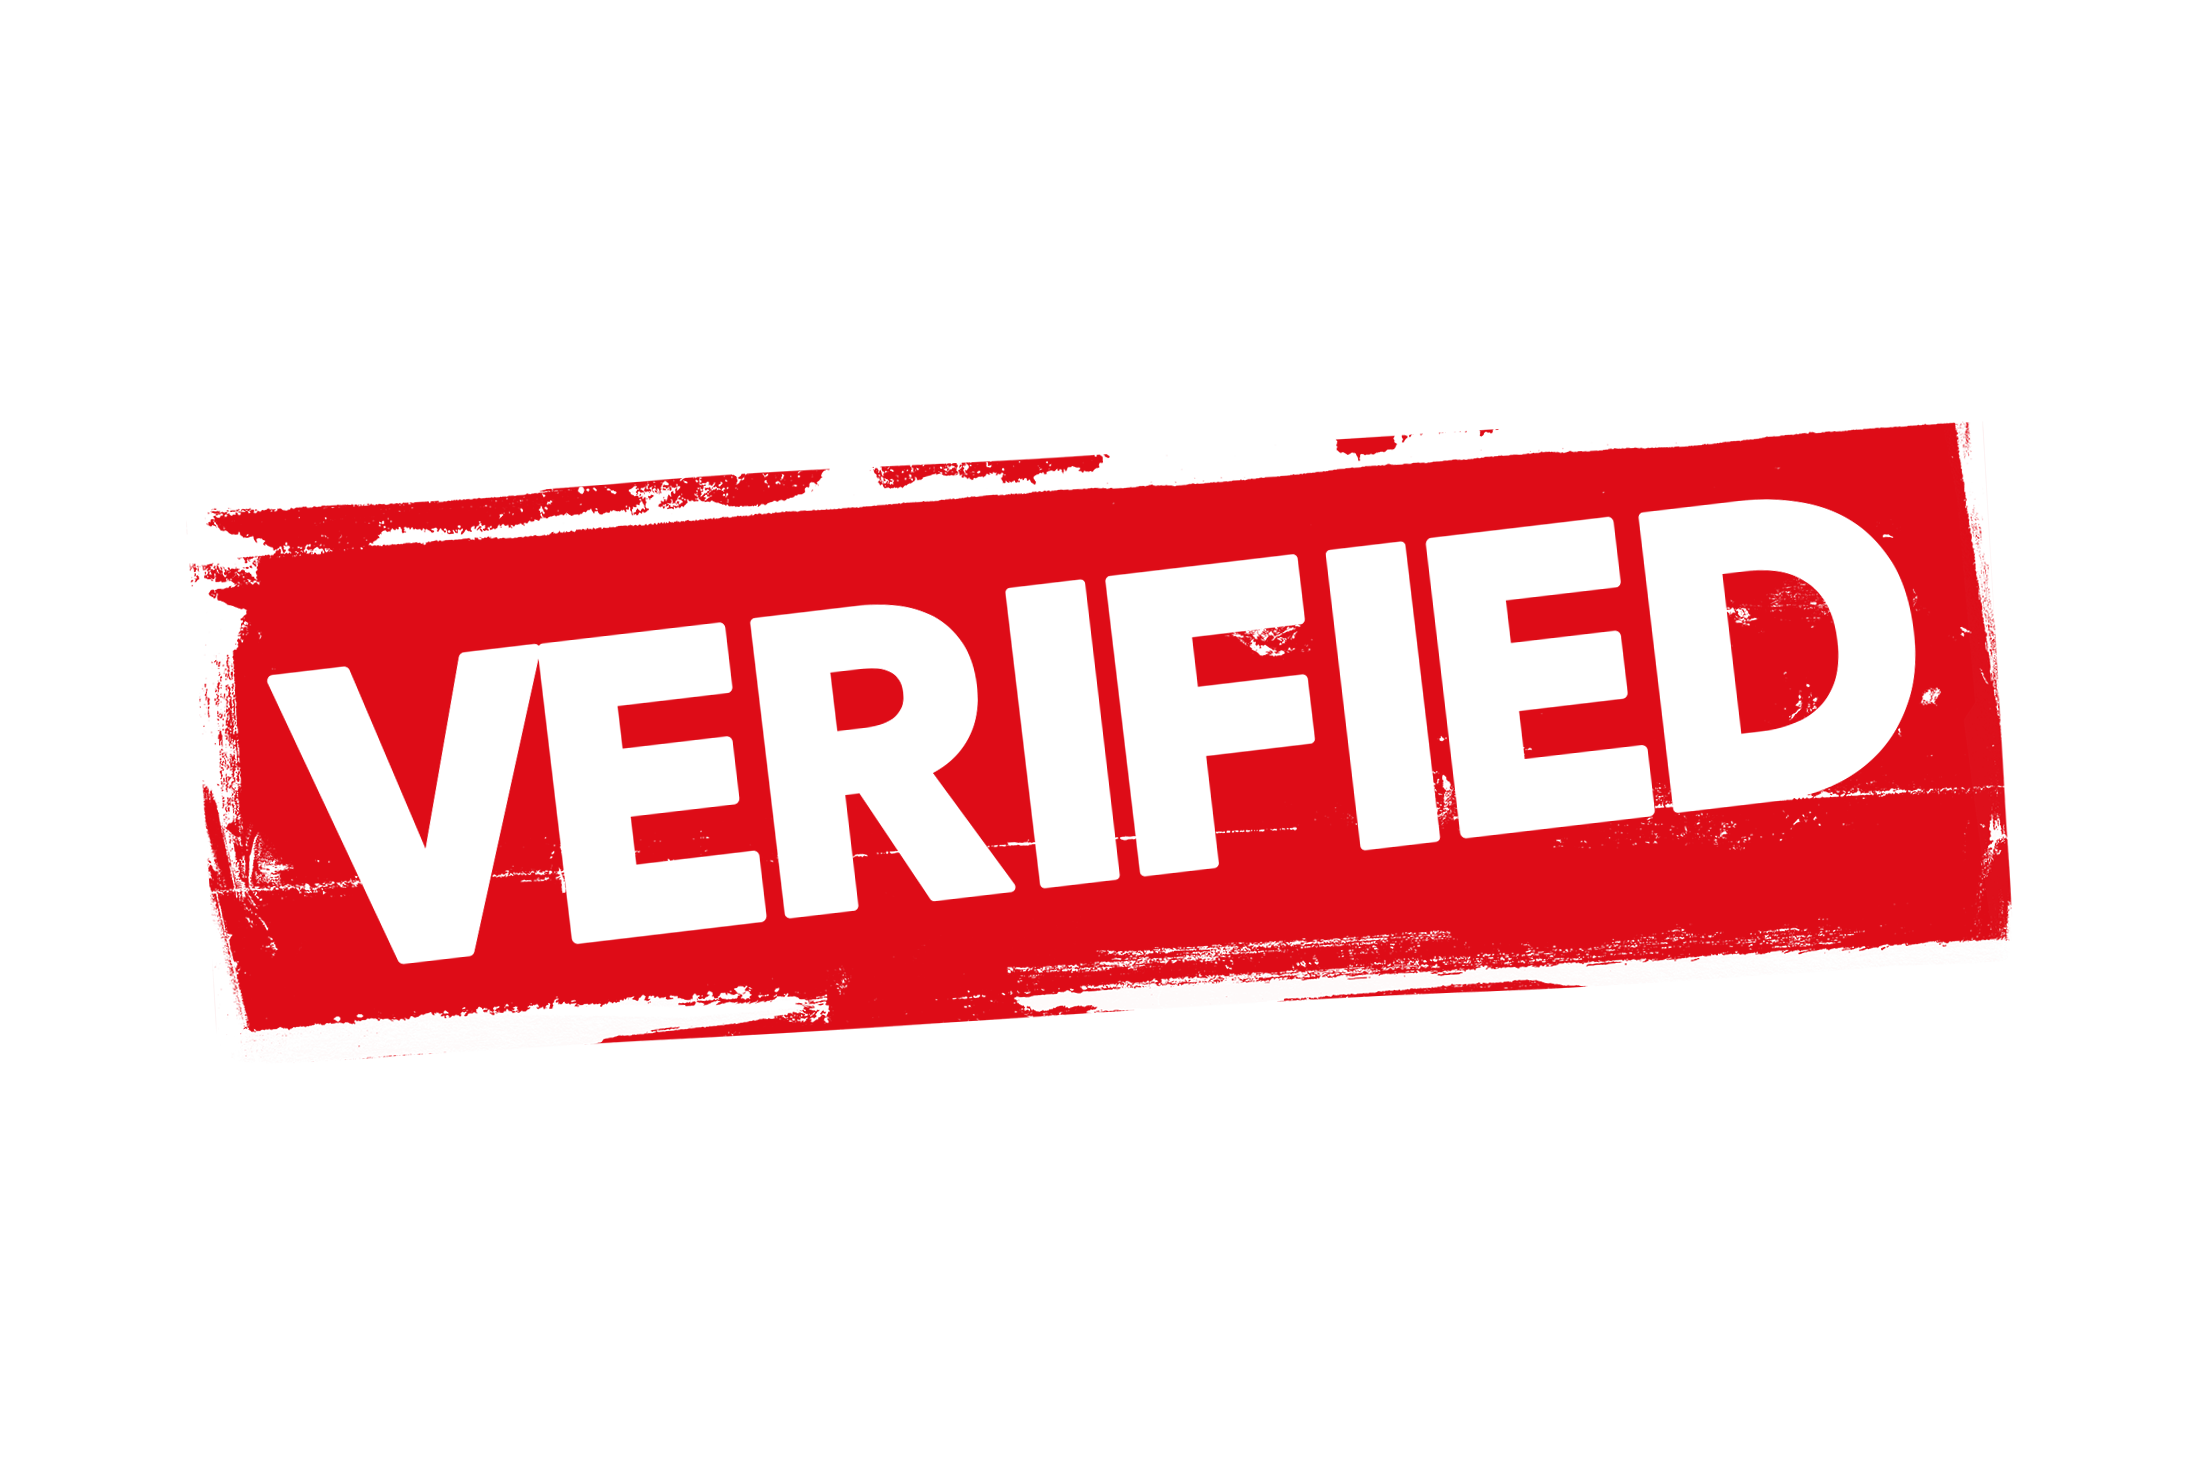 Grunge verified label PSD